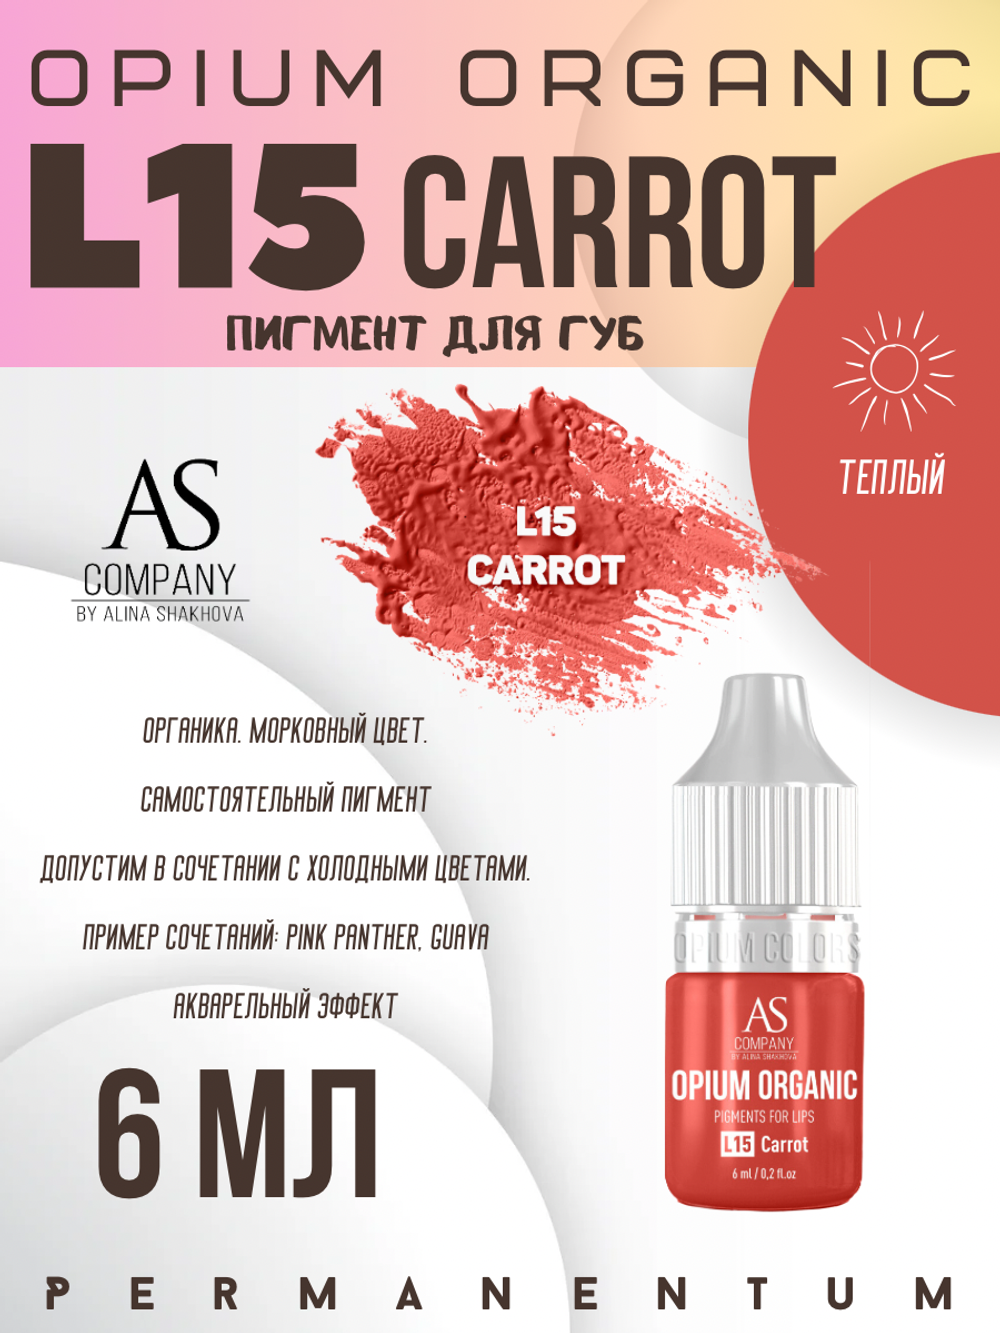 L15 CARROT ORGANIC пигмент для губ TM AS-Company OPIUM COLORS